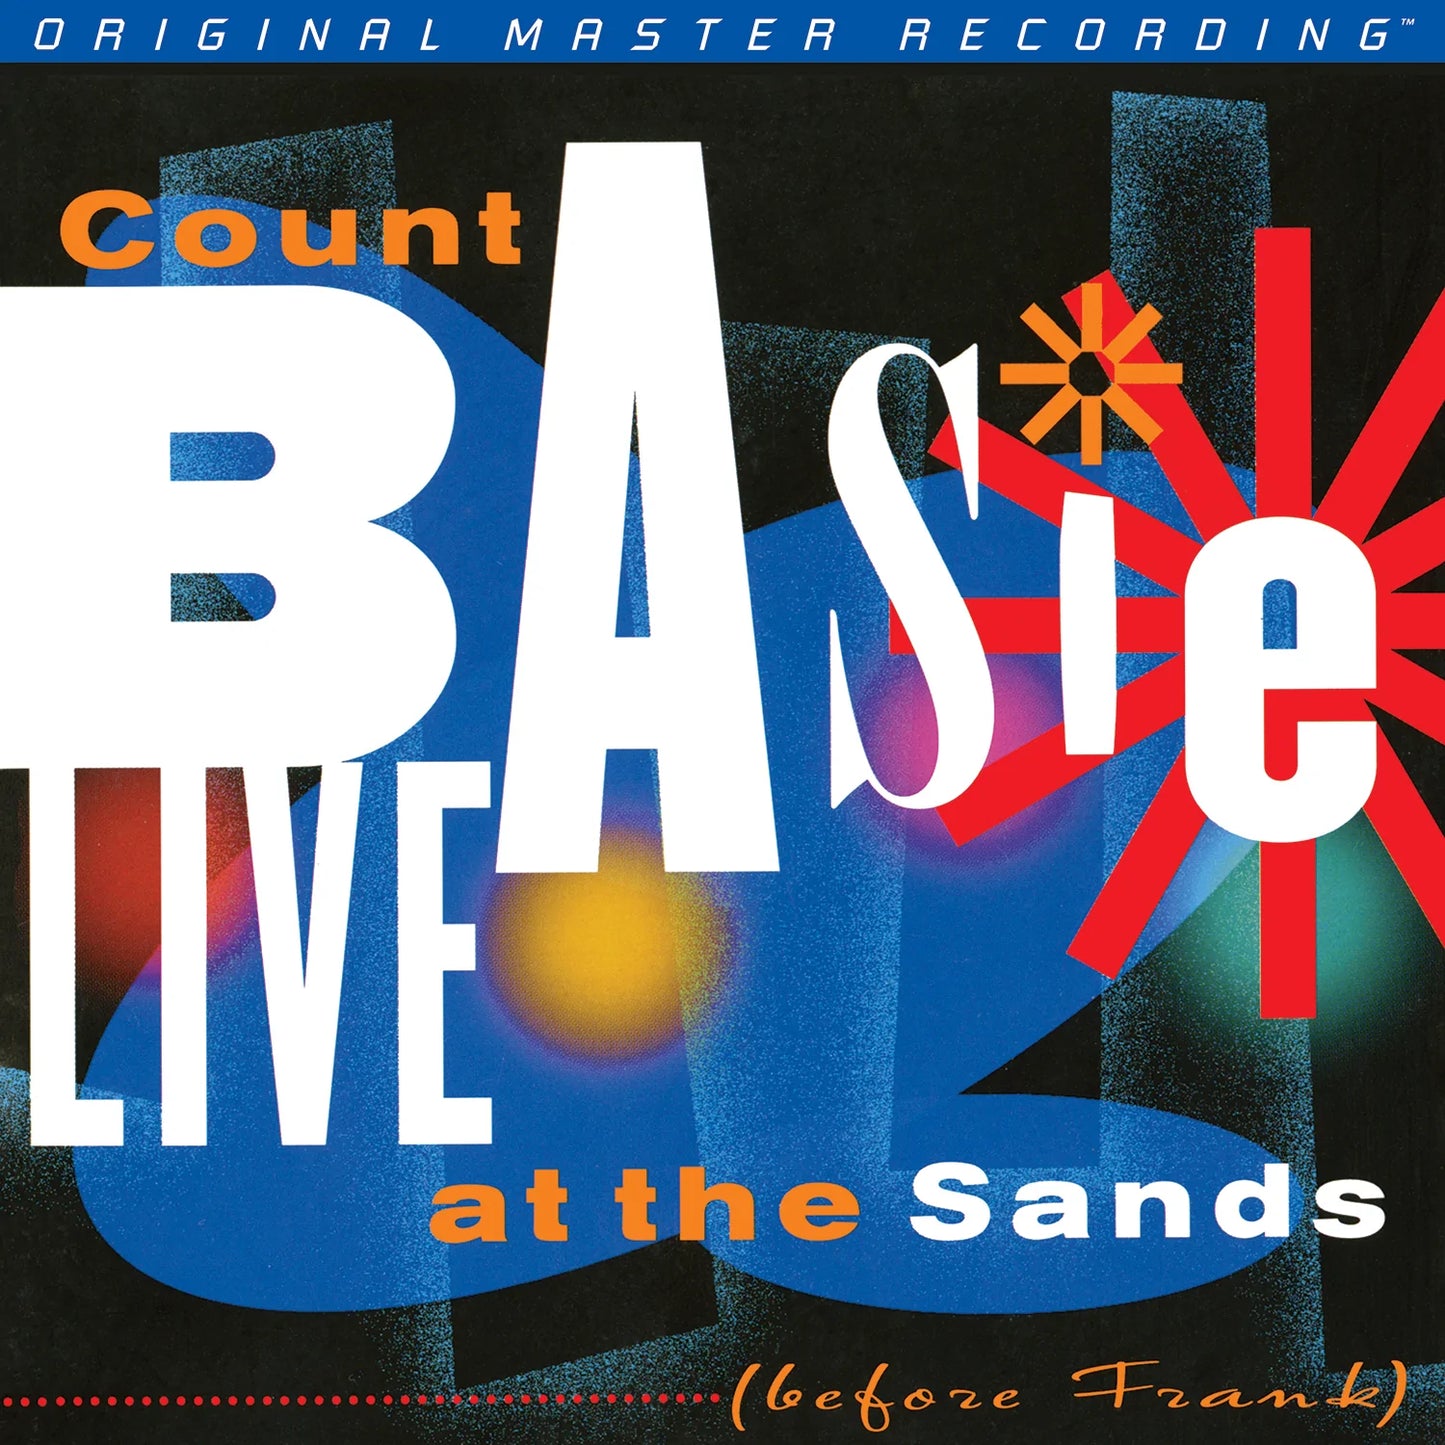 Count Basie - Live At The Sands (Antes de Frank) - MFSL SACD 